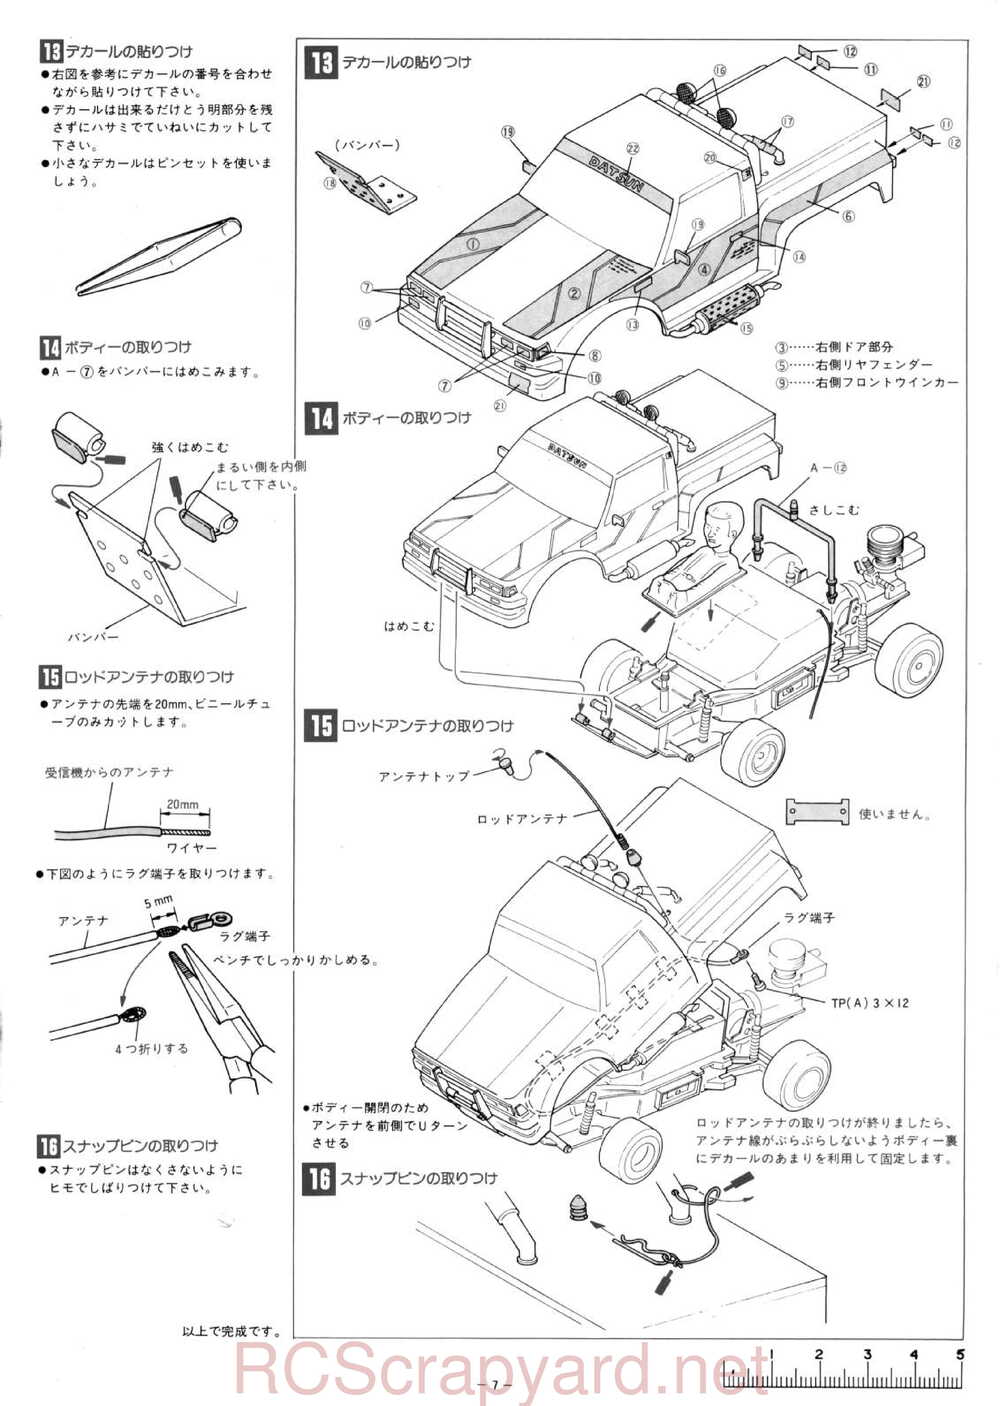 Kyosho - 3085 - Minitz-06 - Datsun-Stepside - Manual - Page 07